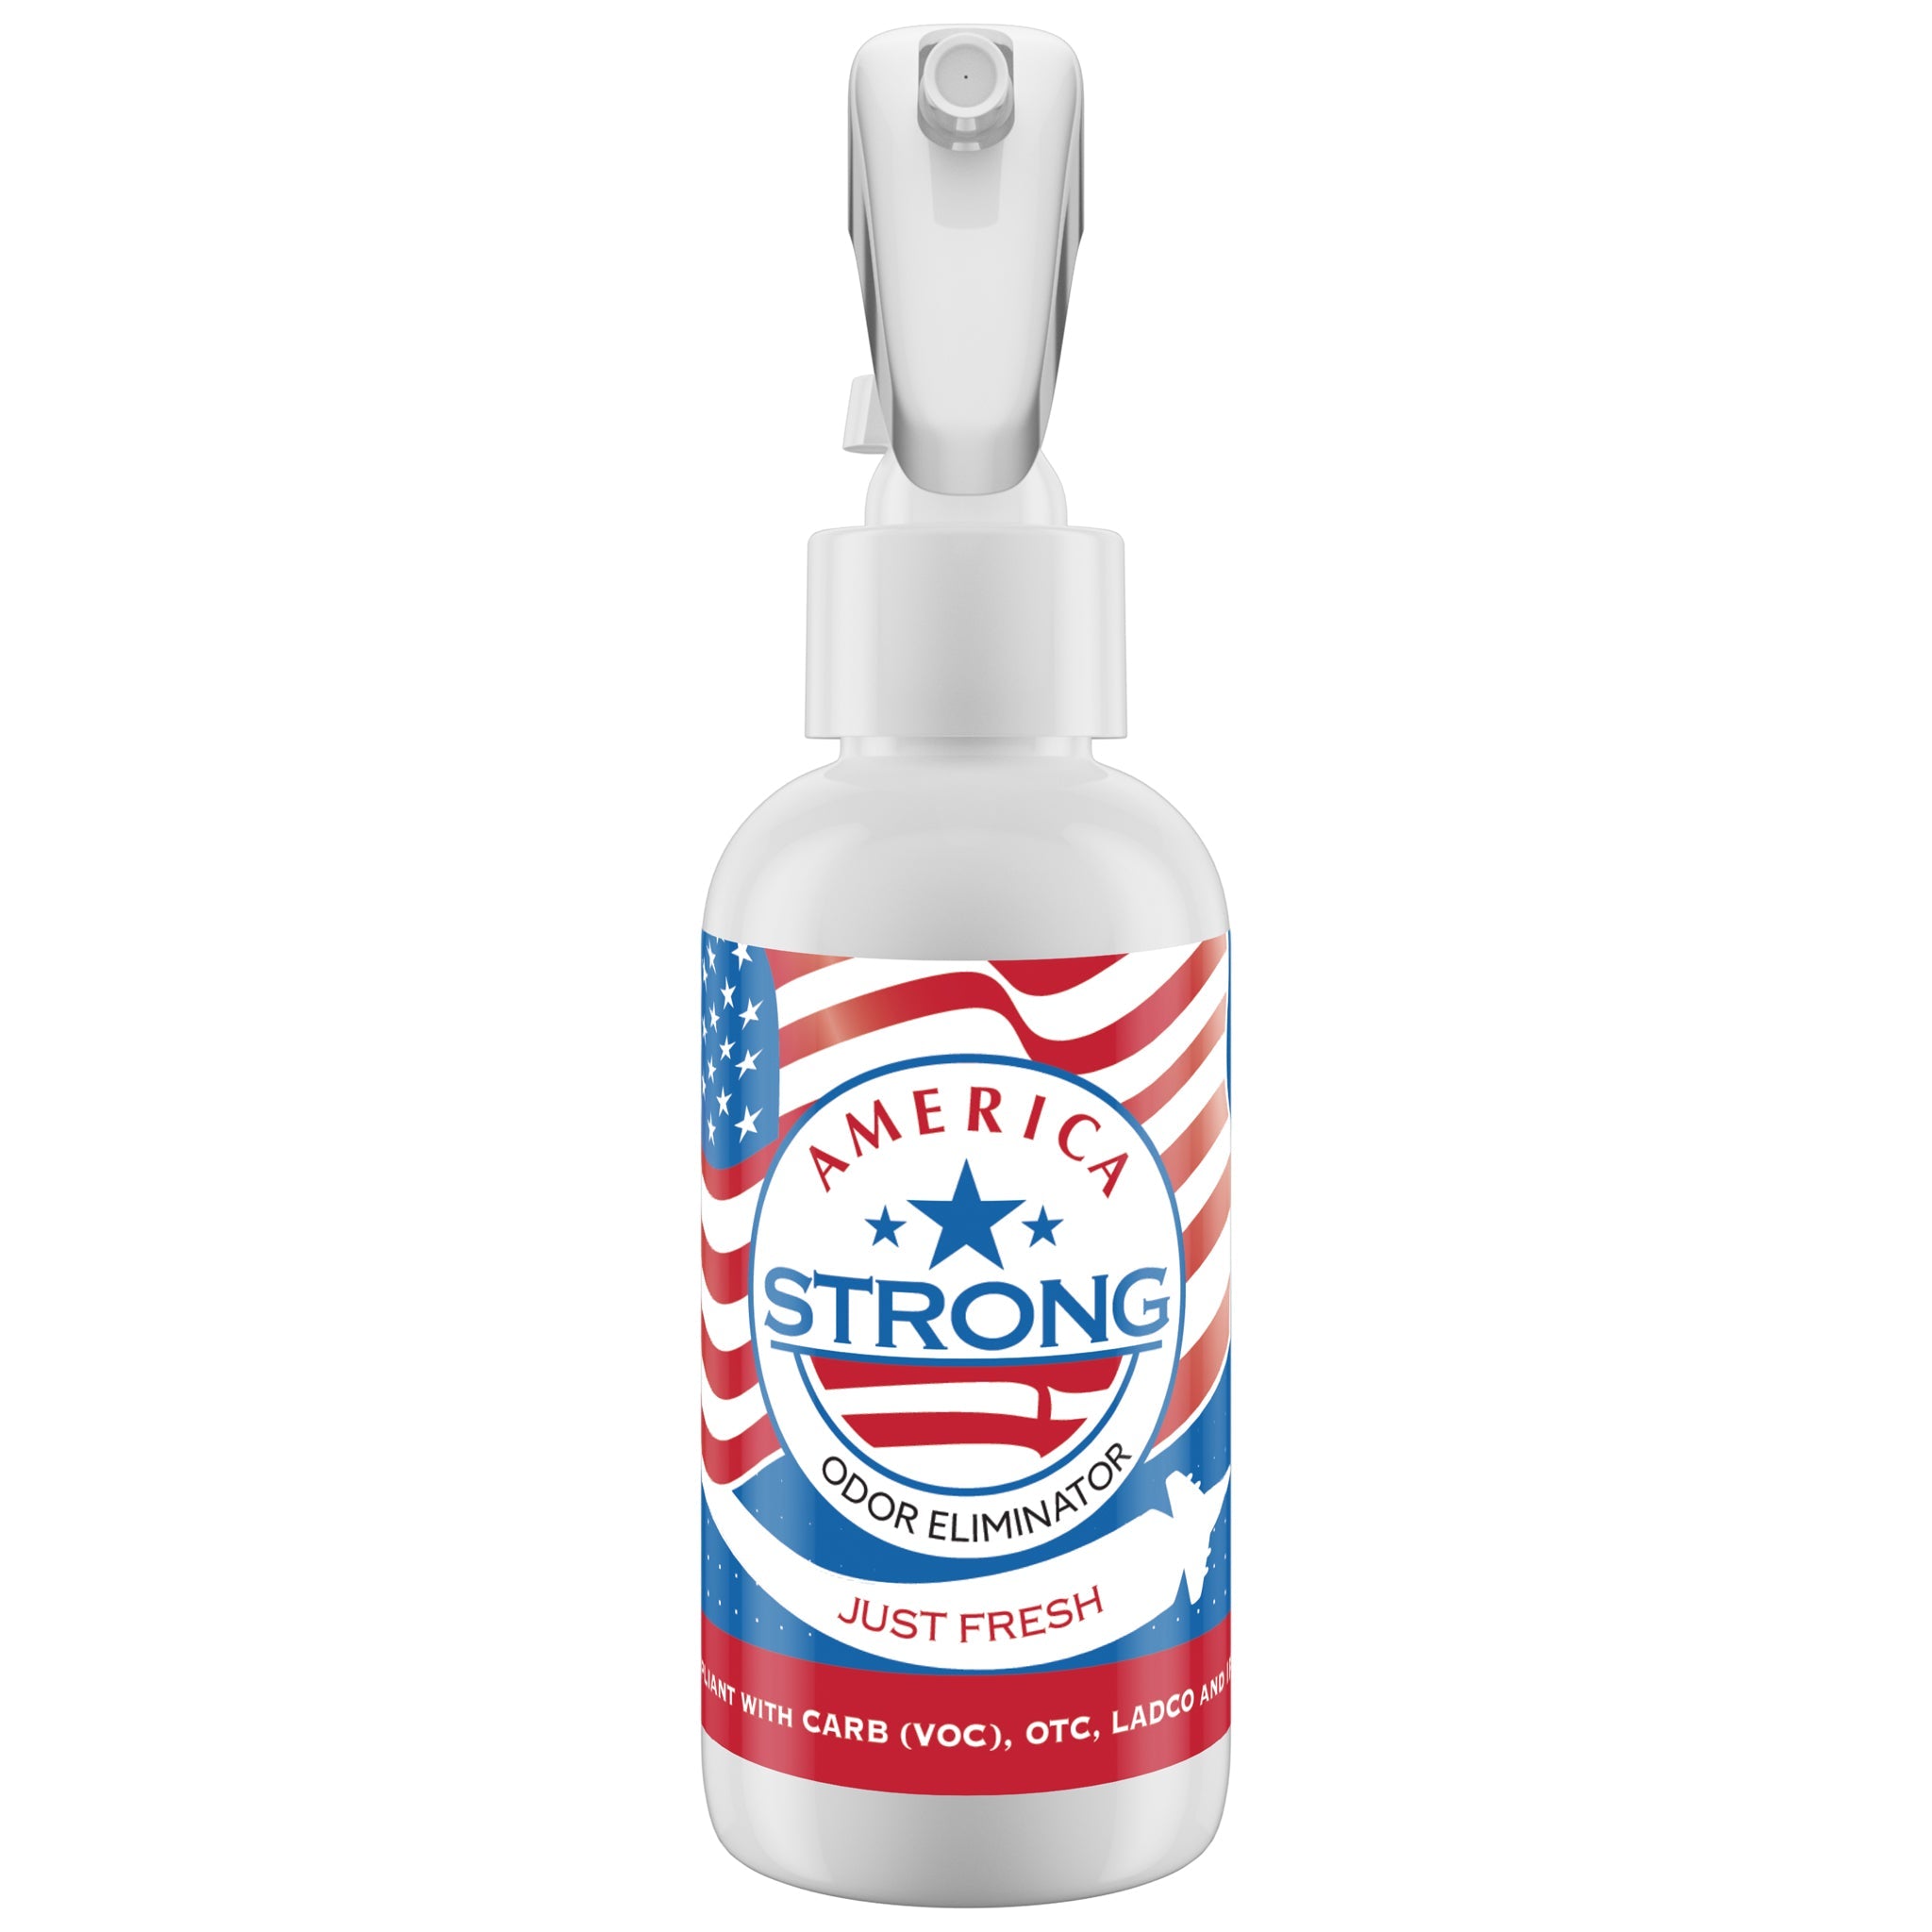 America Strong Odor Eliminator - Just Fresh Scent Size: 4.0oz